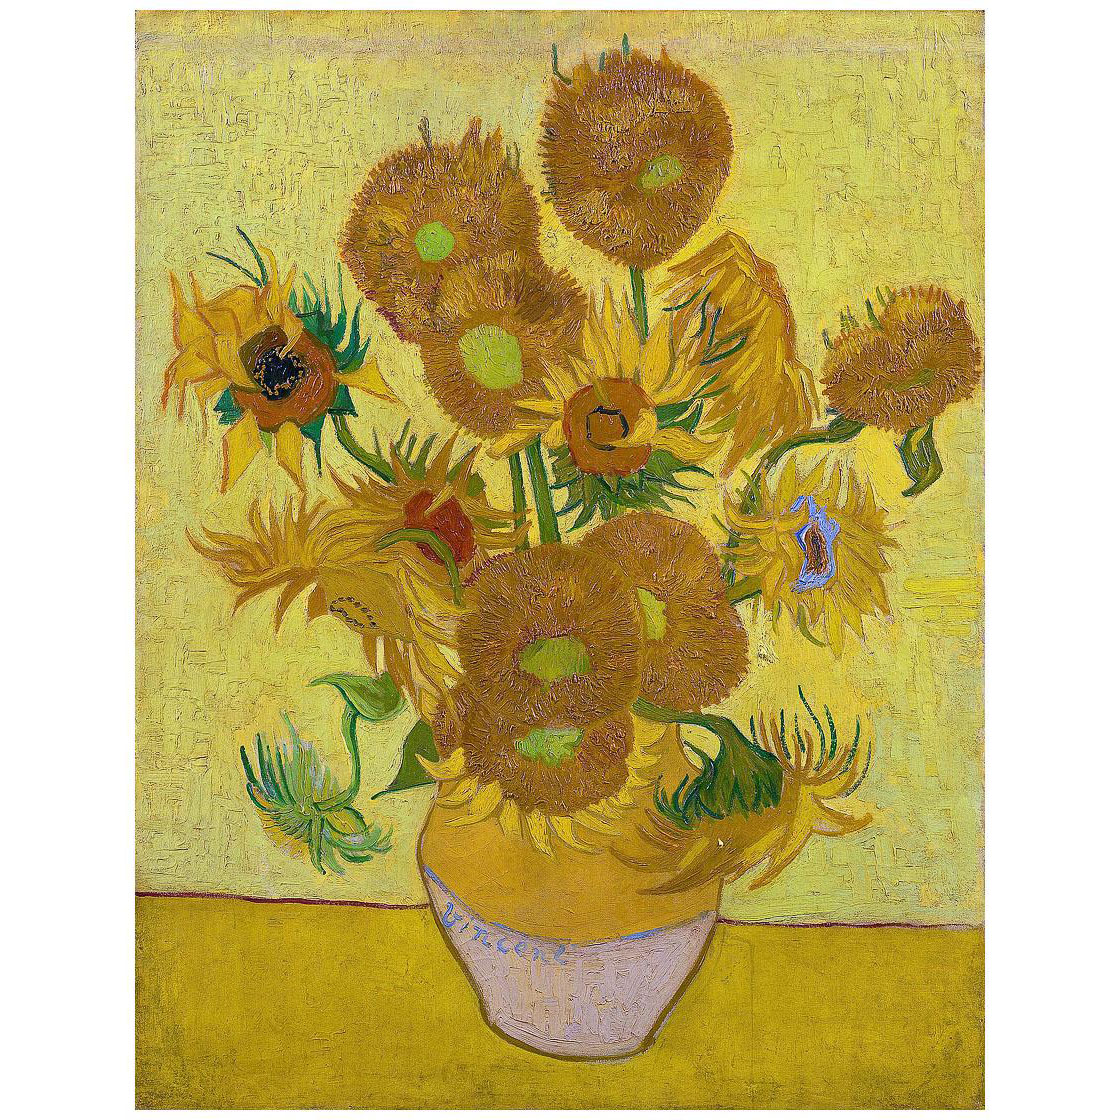 Vincent van Gogh. Sunflowers. 1889. Van Gogh Museum Amsterdam